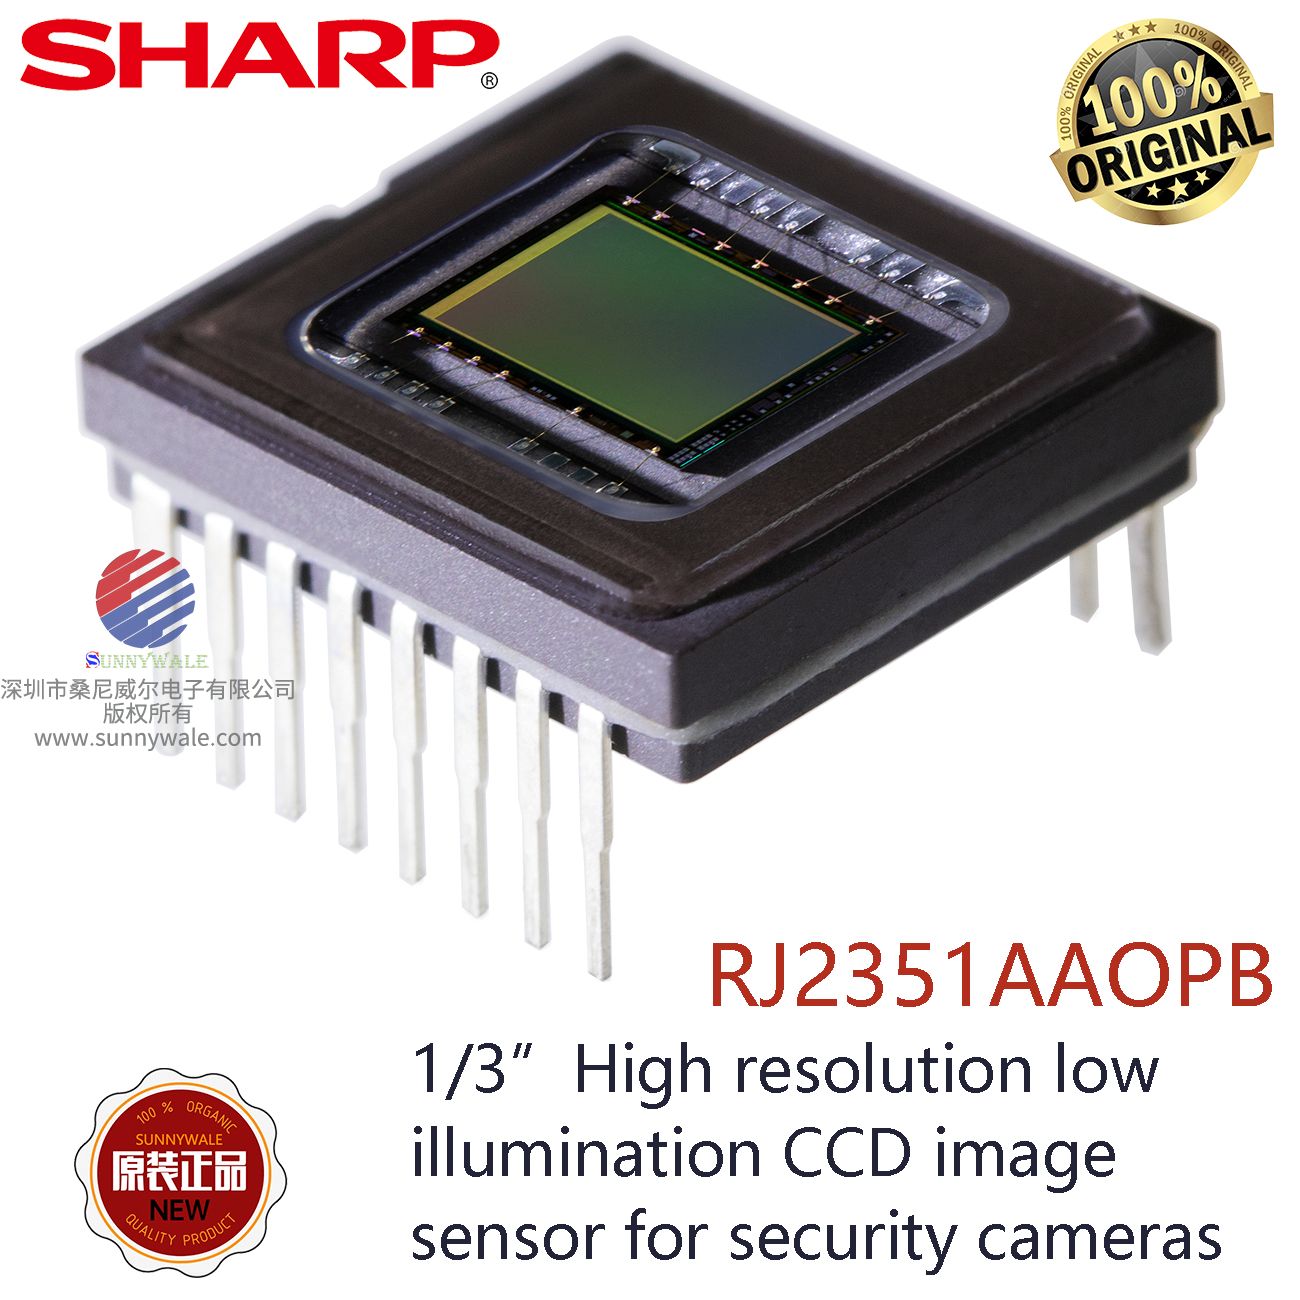 RJ2351AAOPB，RJ2351AA0PB, SHARP 1/3 CCD, 模拟输出高清摄像机CCD，高解析度低照度CCD图像传感器，用于安防摄像机